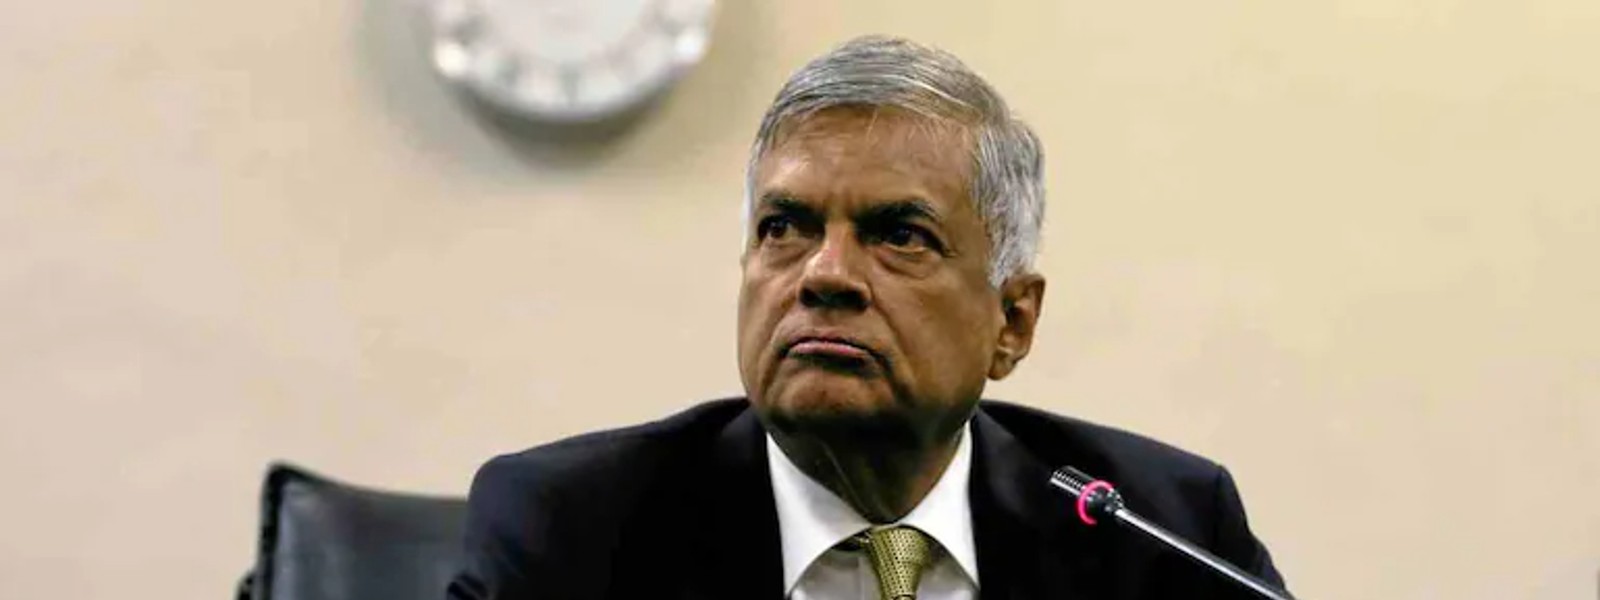 IMF Agreement will give Sri Lanka confidence – President